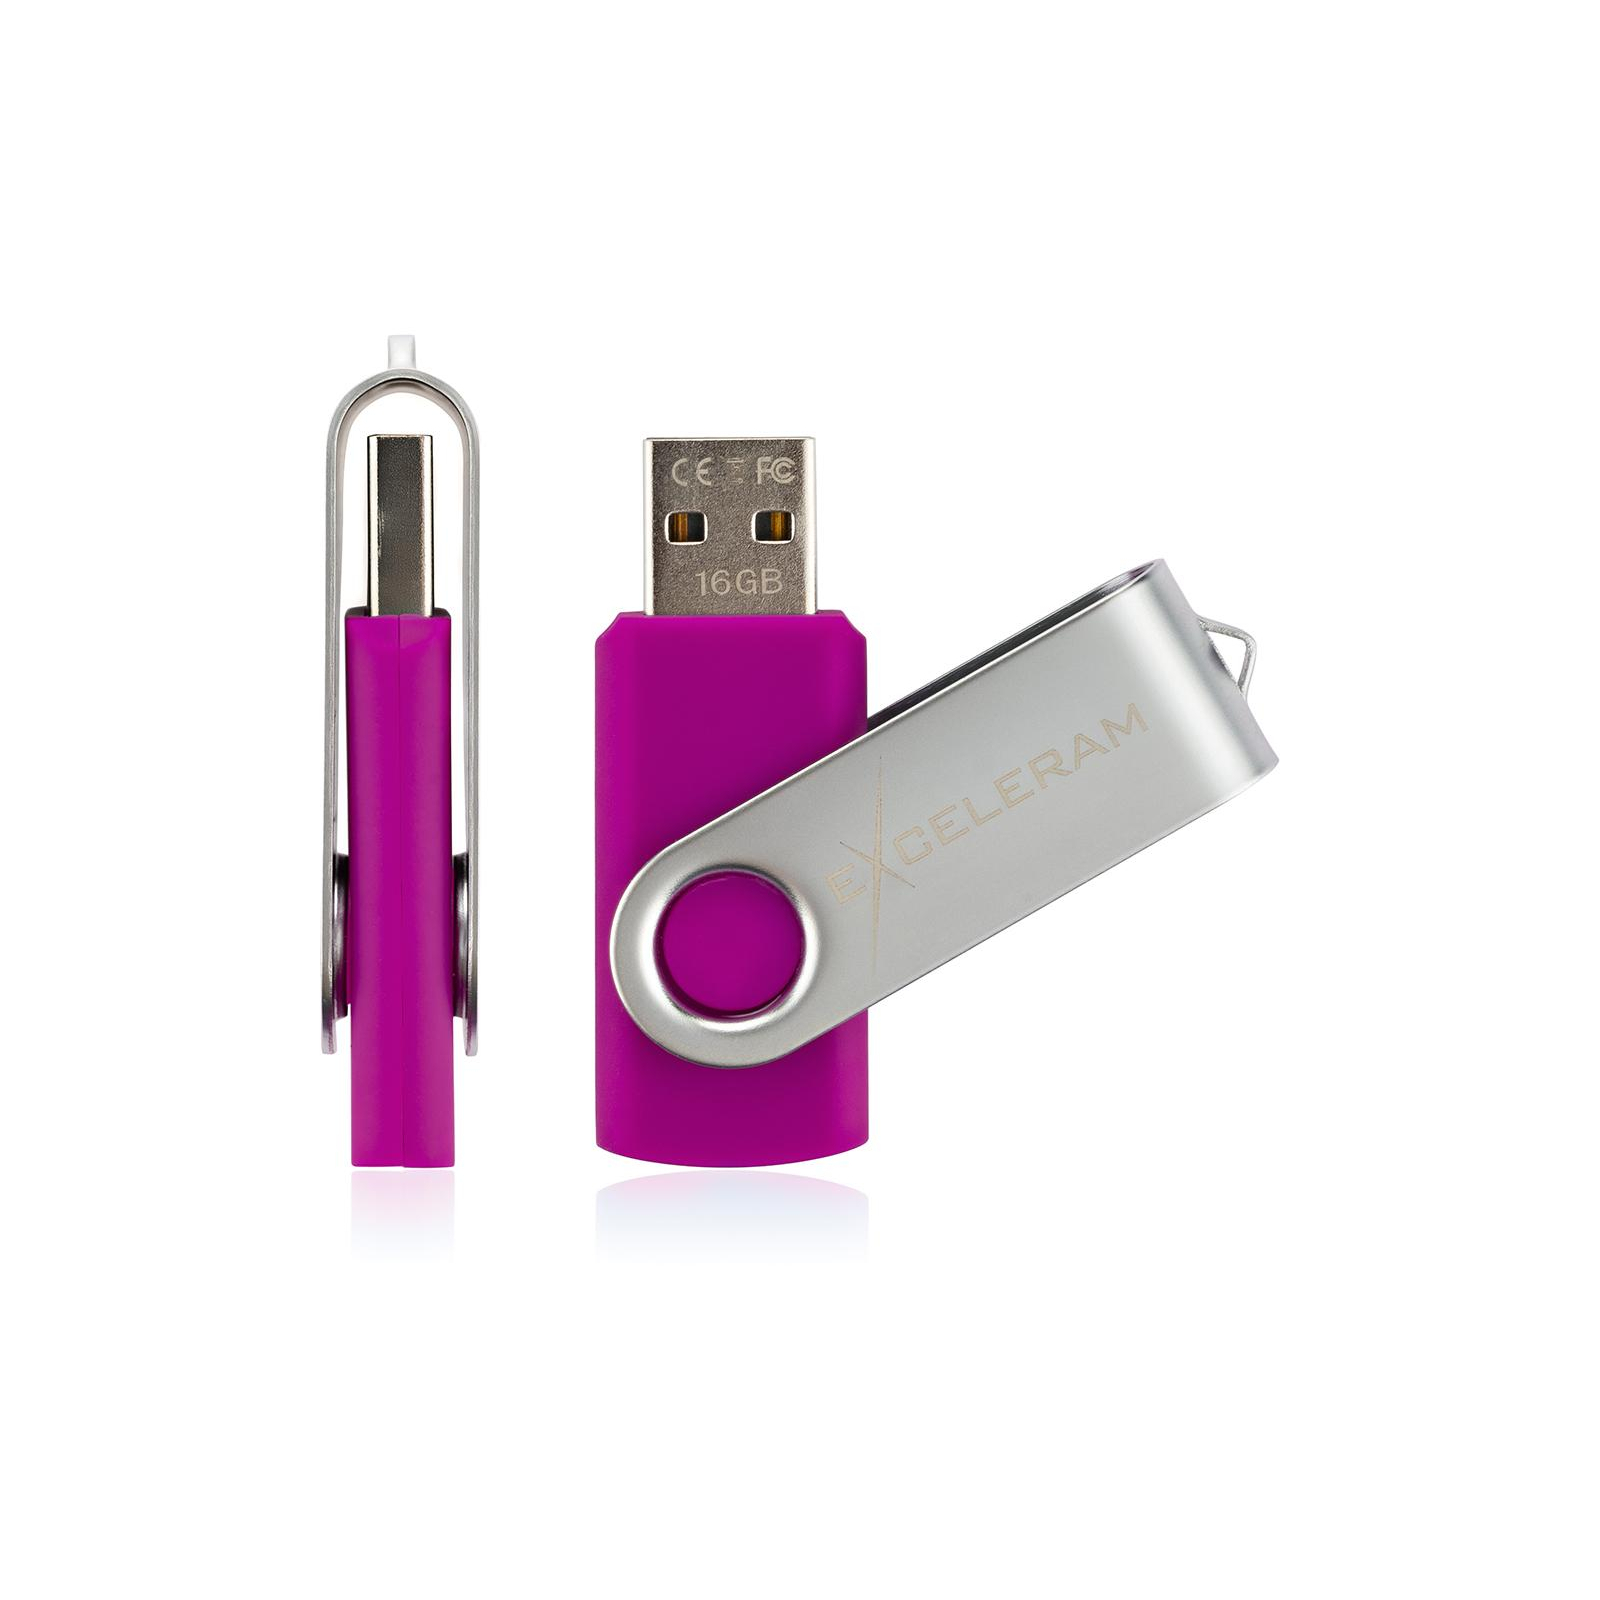 USB флеш накопитель eXceleram 8GB P1 Series Silver/Purple USB 2.0 (EXP1U2SIPU08) изображение 4